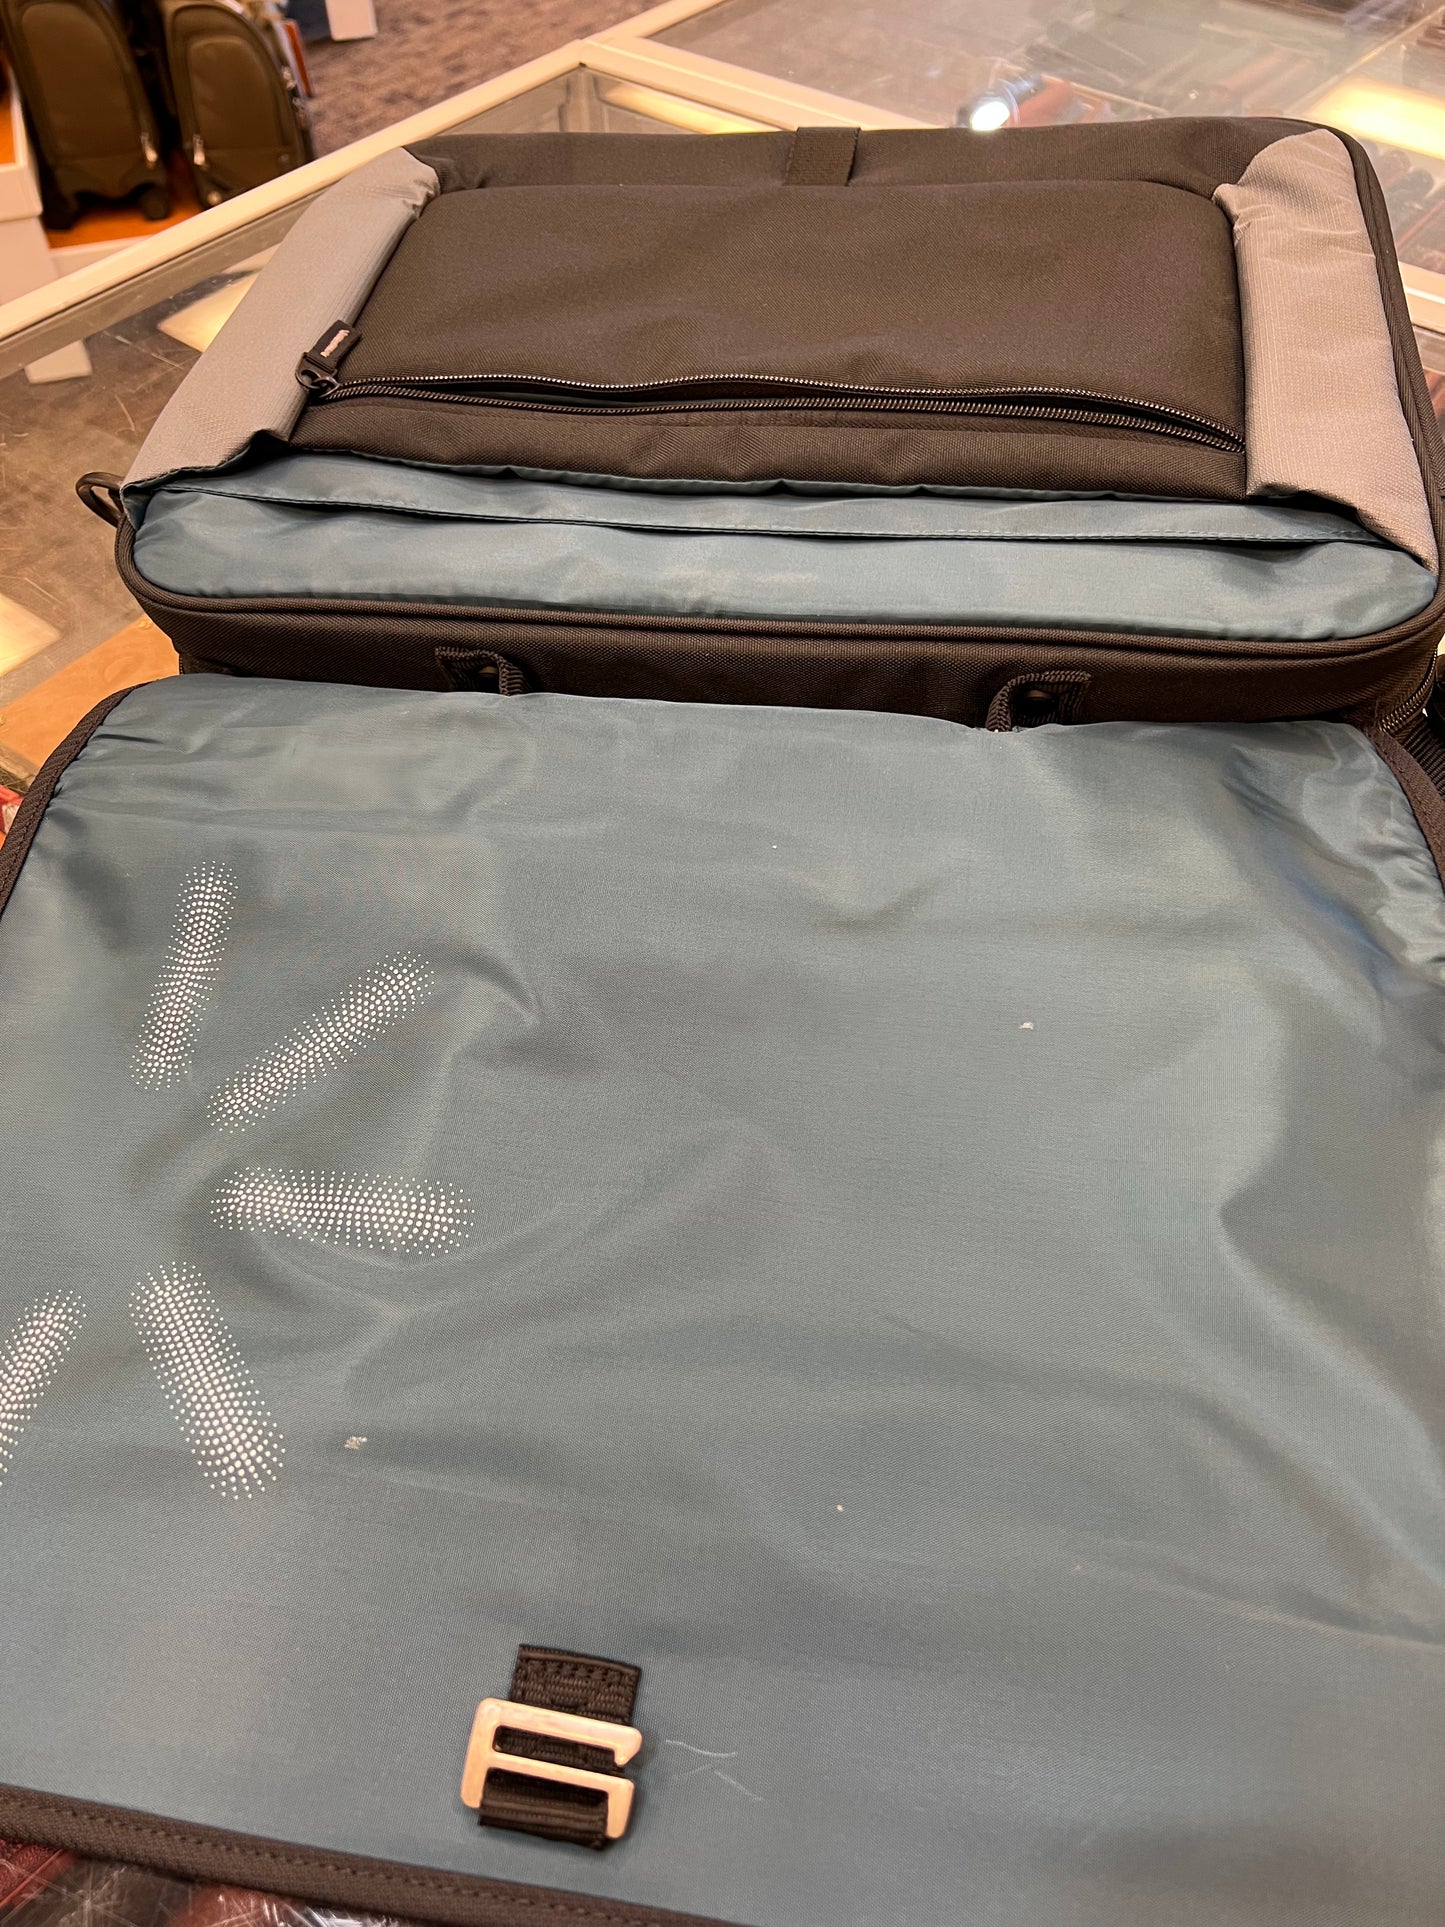 Thule Case Logic Laptop Messenger Bag